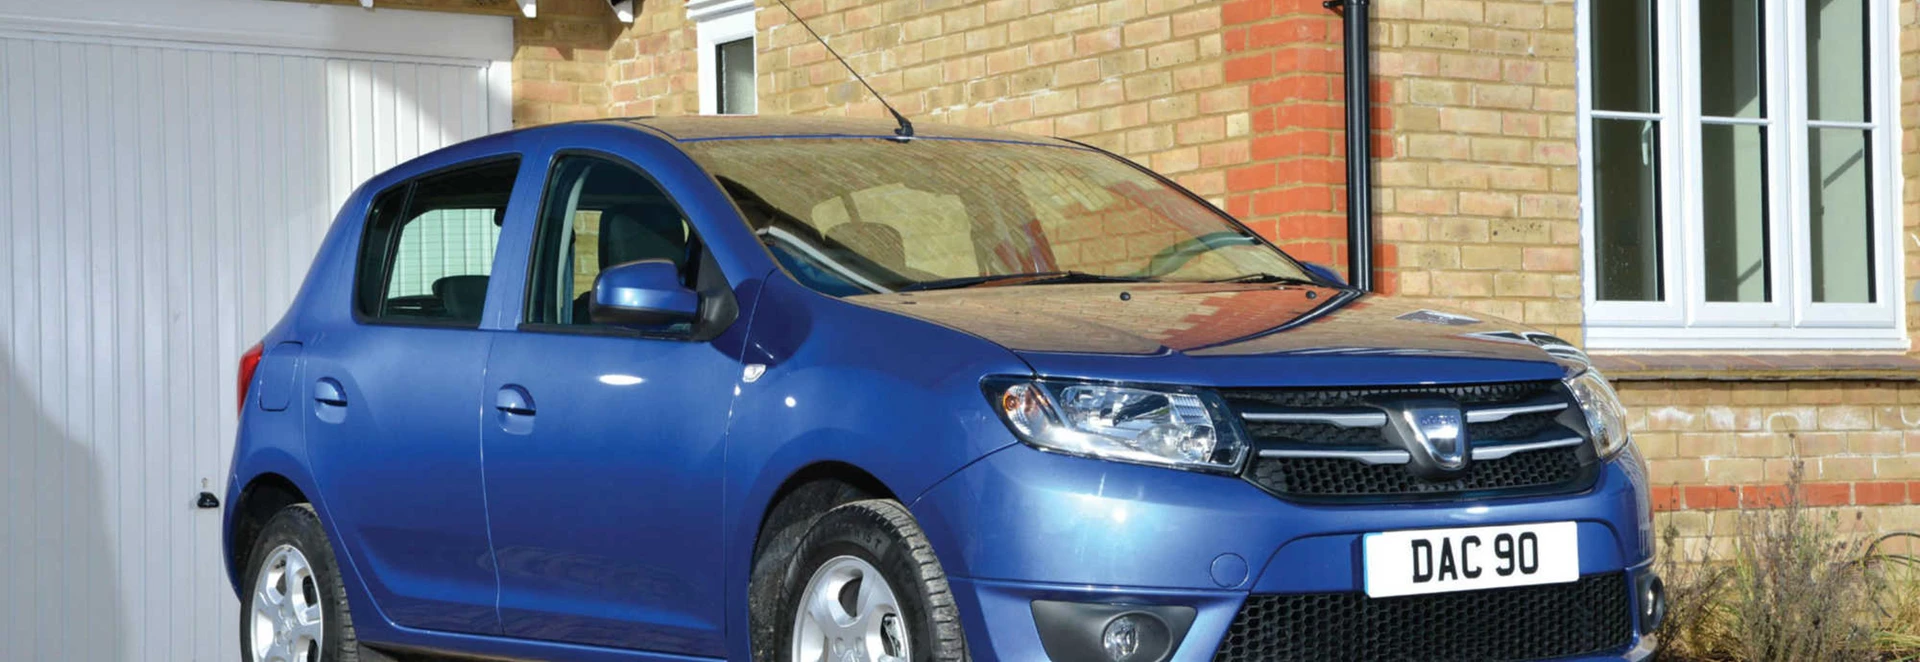 Dacia Sandero hatchback review 